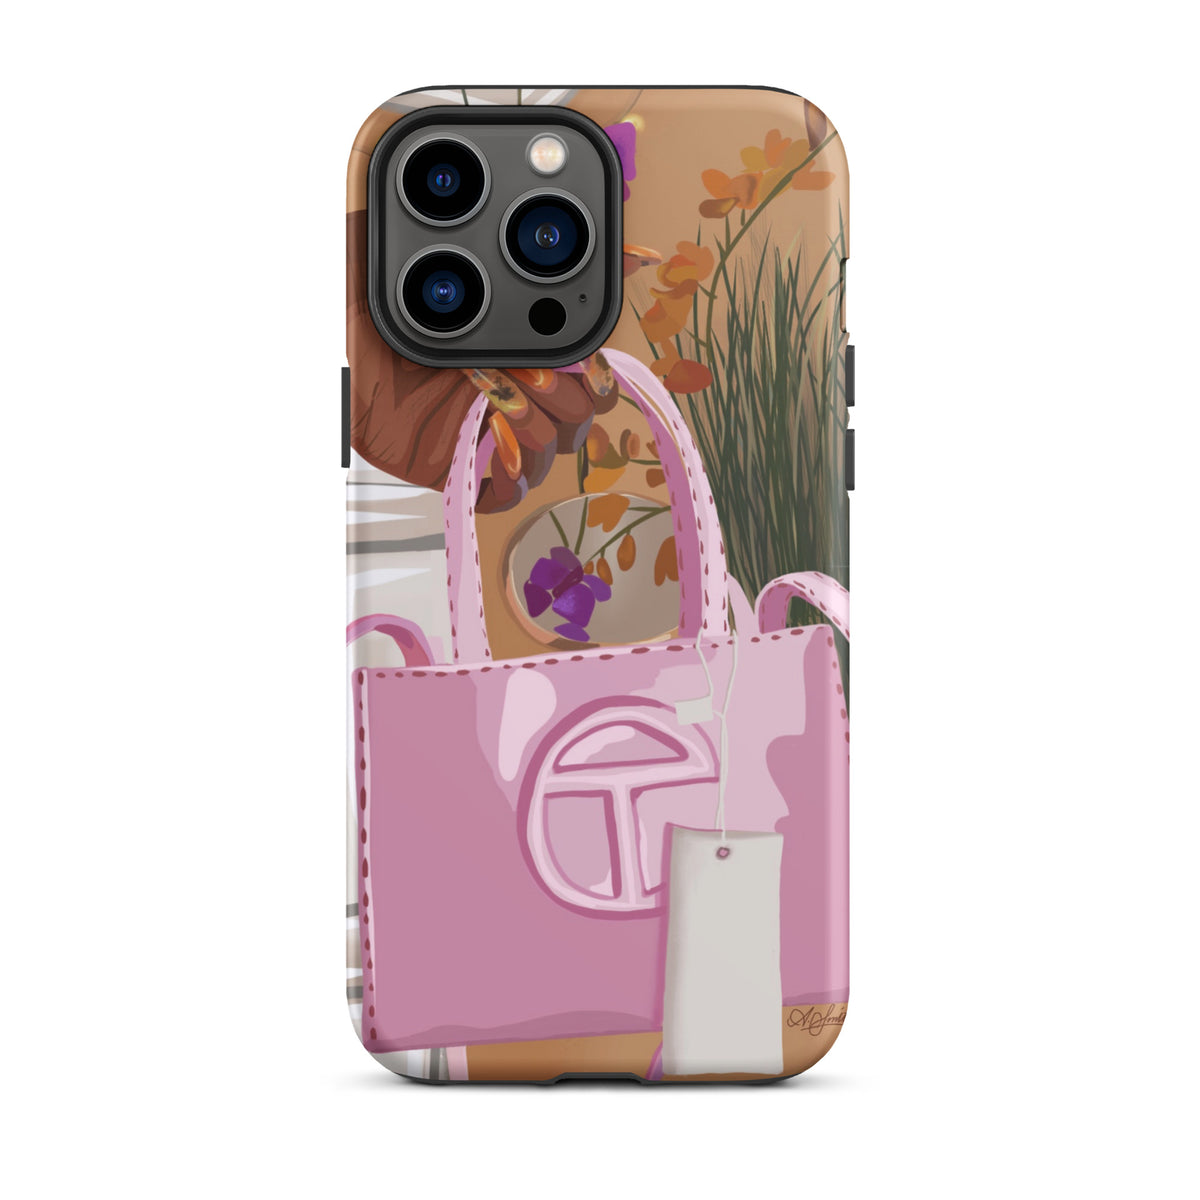 Poppin' in my Telfar iPhone case – ItsAnaything Art